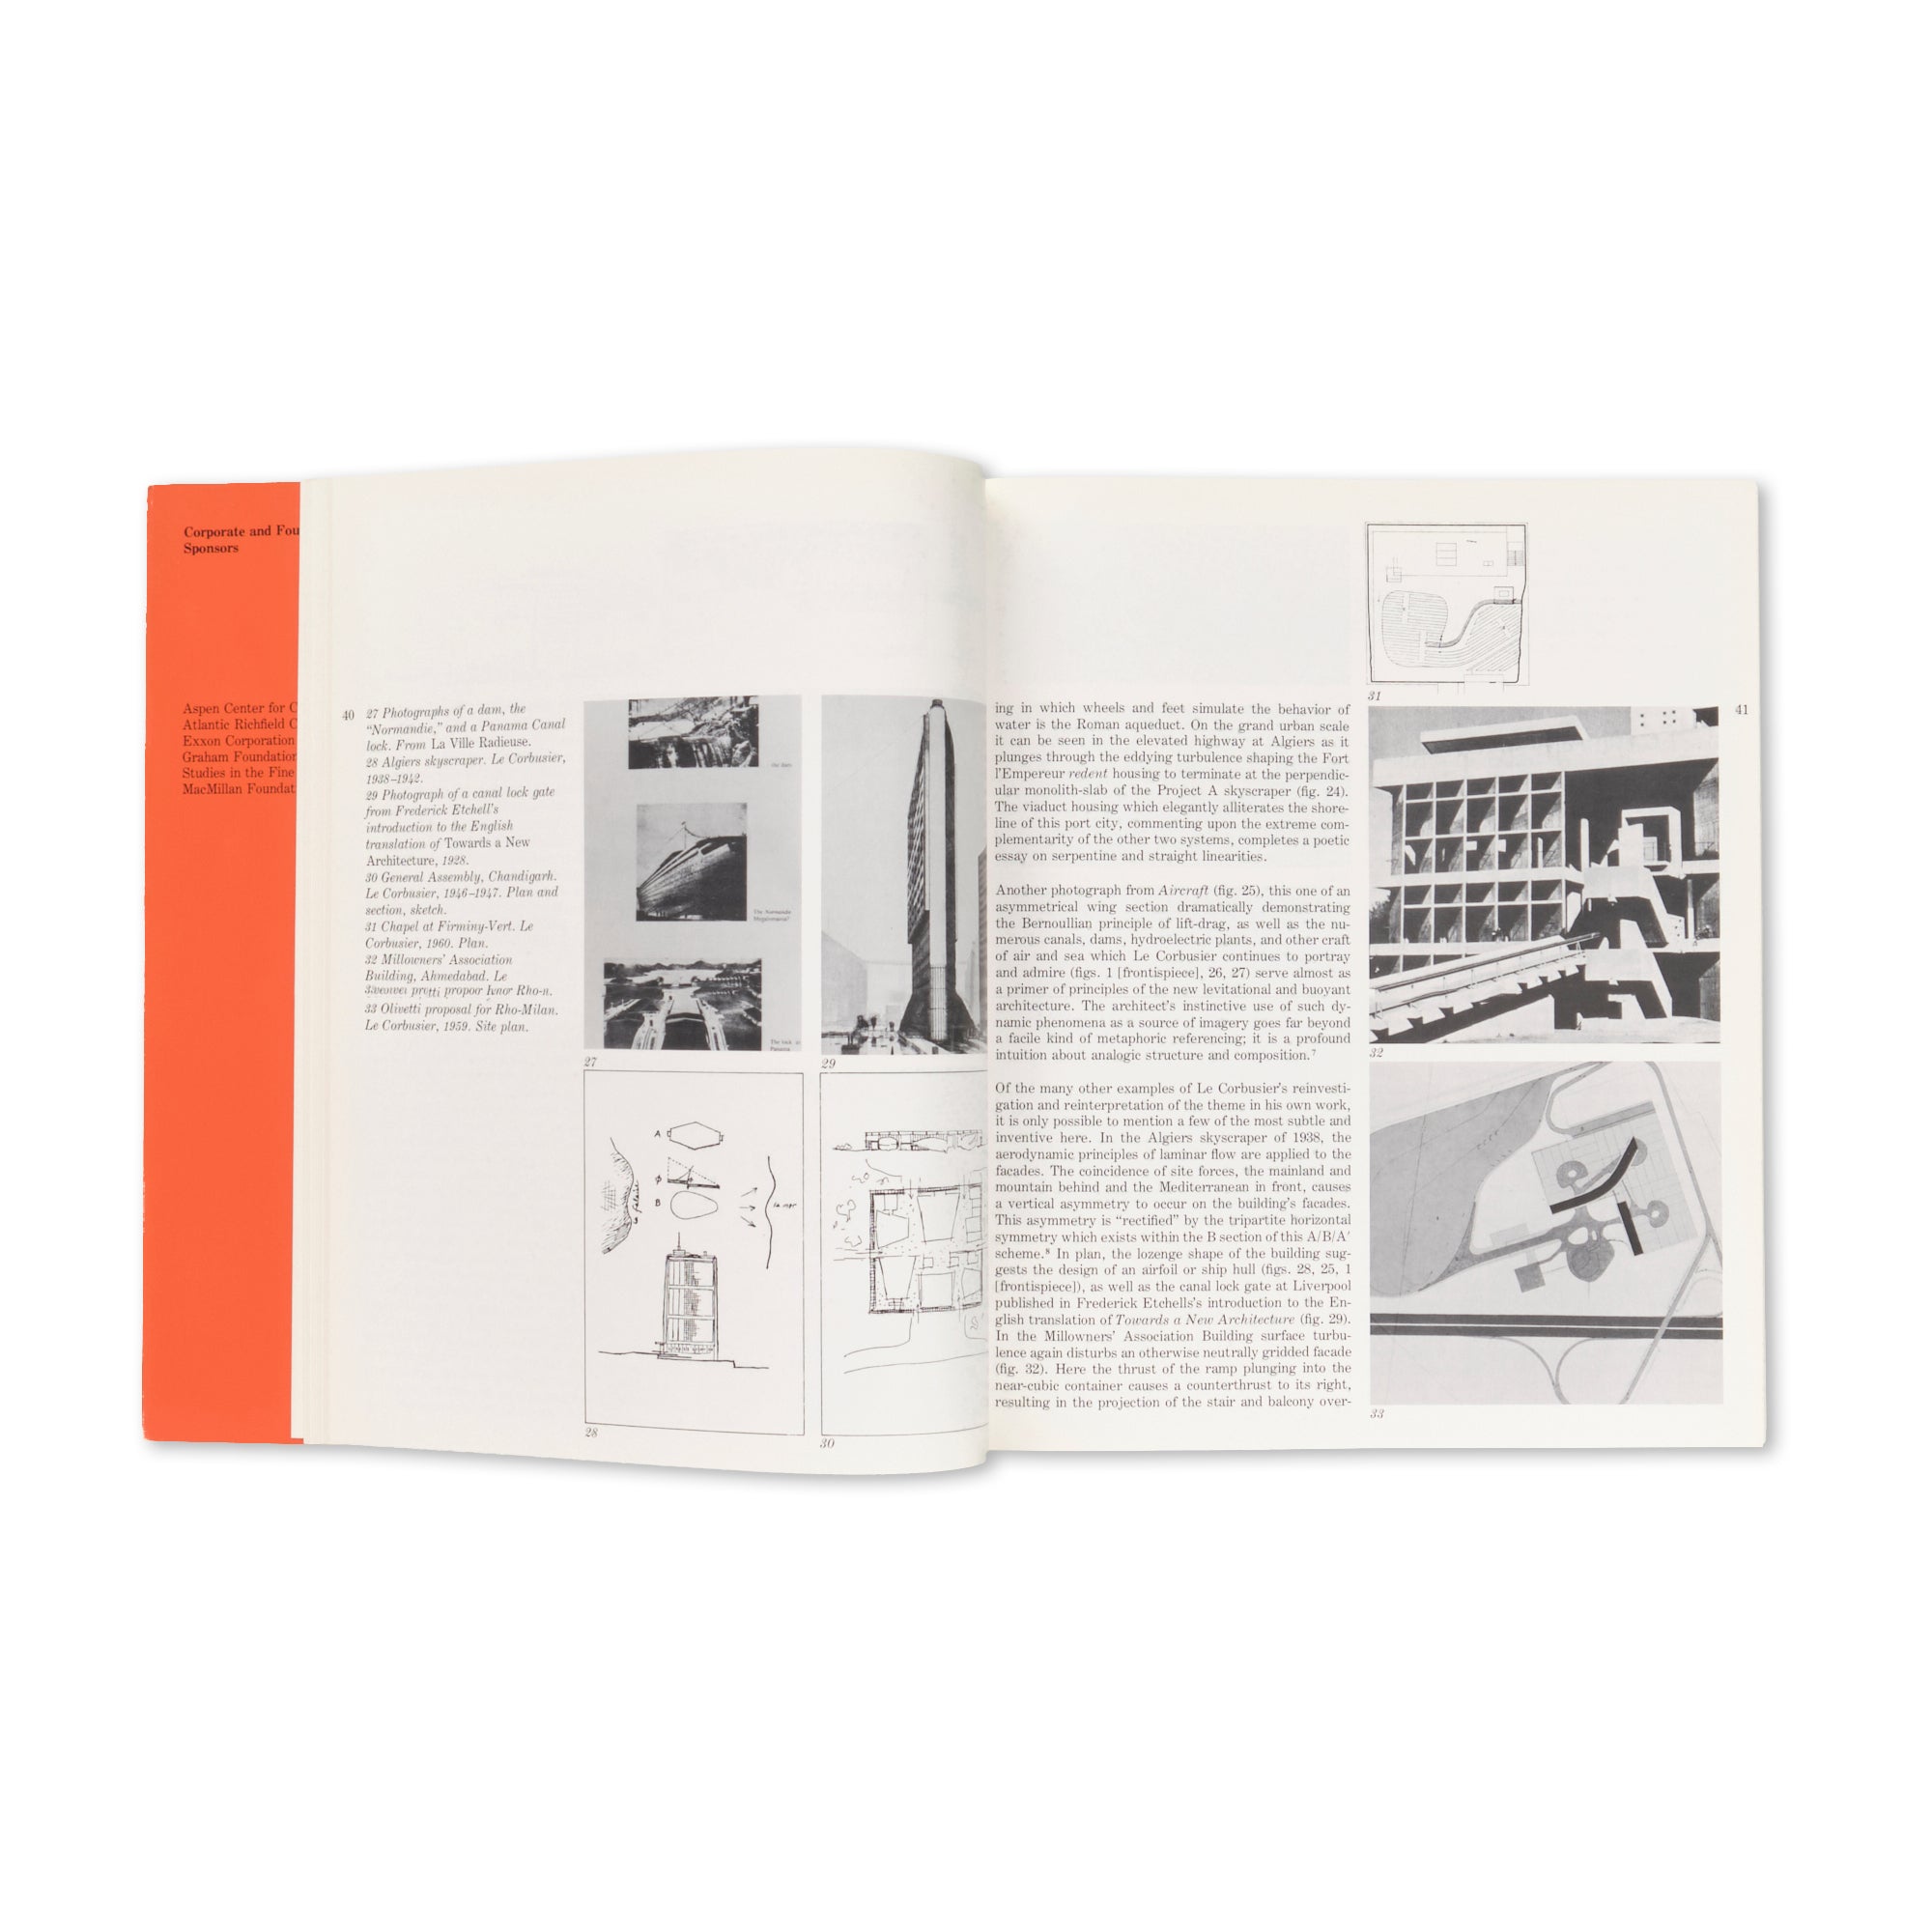 Le Corbusier / Kenneth Frampton — Oppositions 19/20